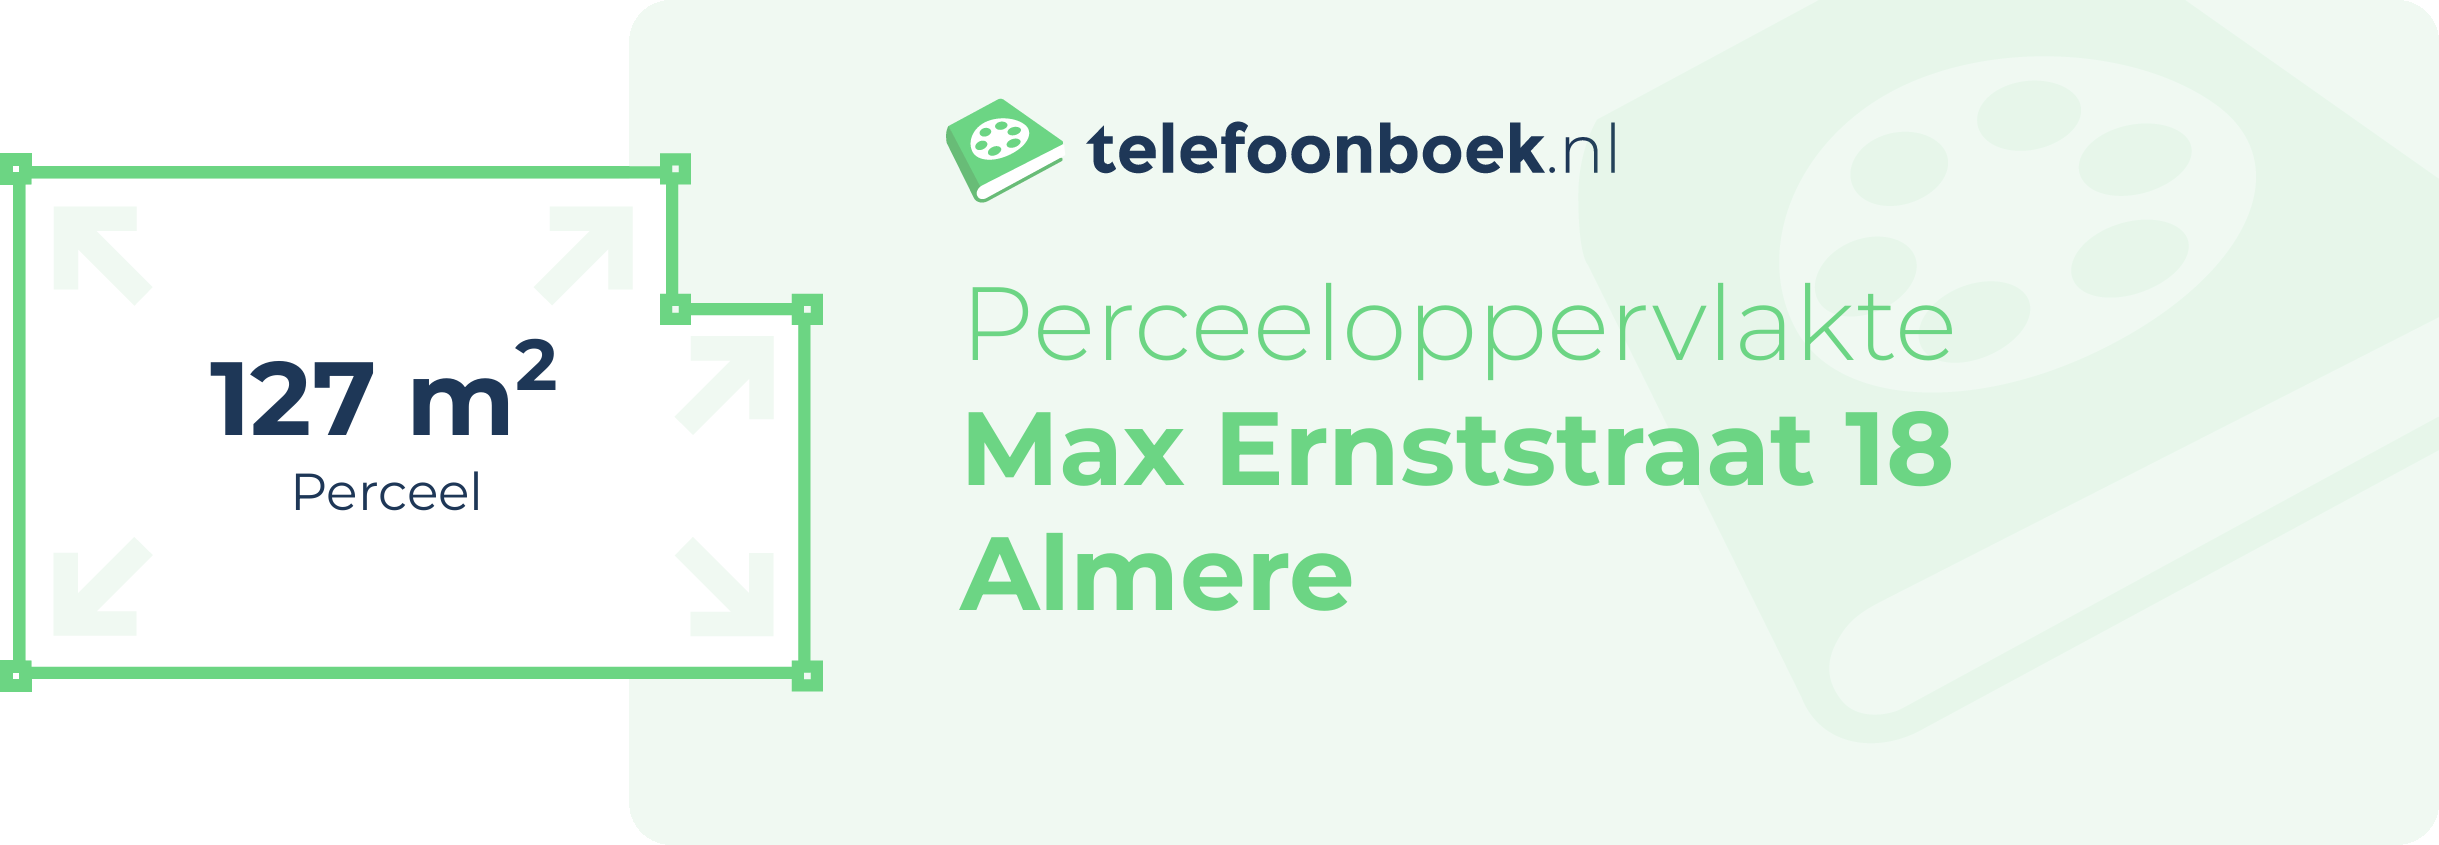 Perceeloppervlakte Max Ernststraat 18 Almere